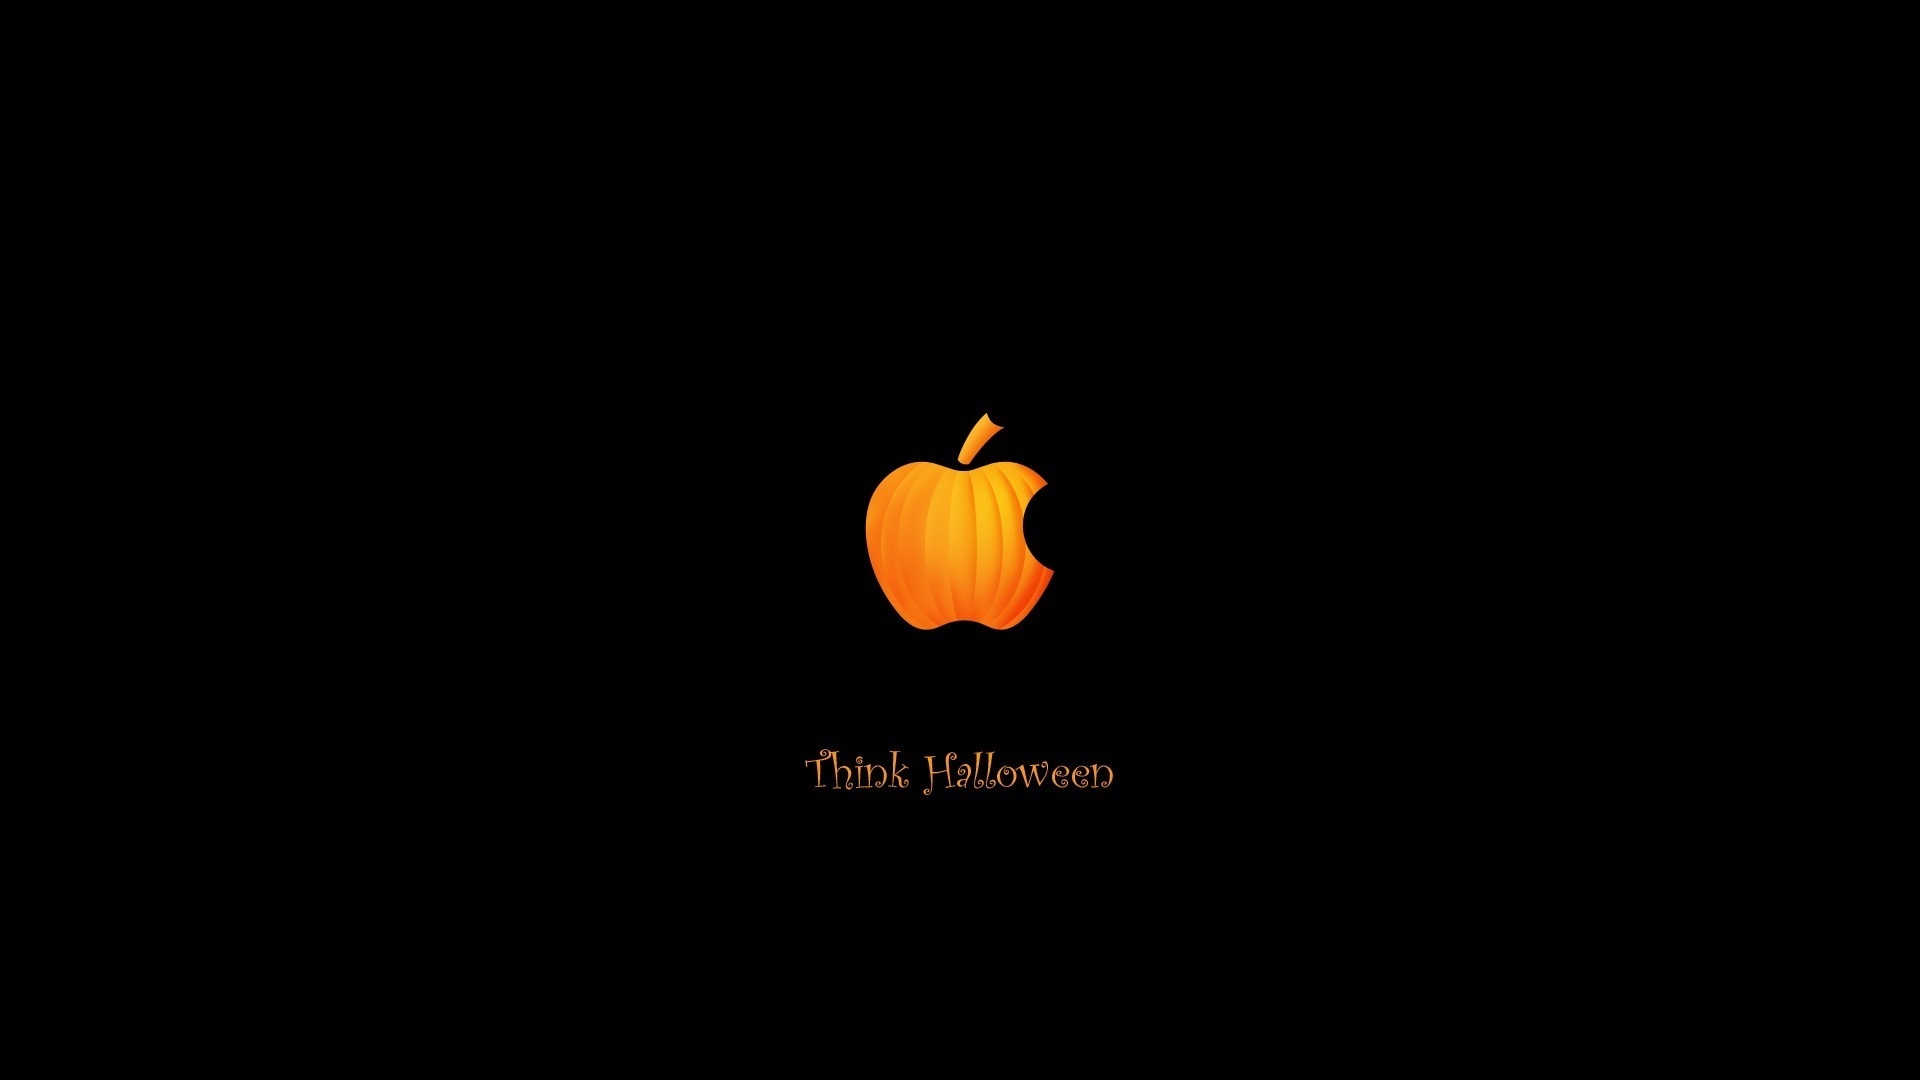 Pumpkin Apple for 1920 x 1080 HDTV 1080p resolution